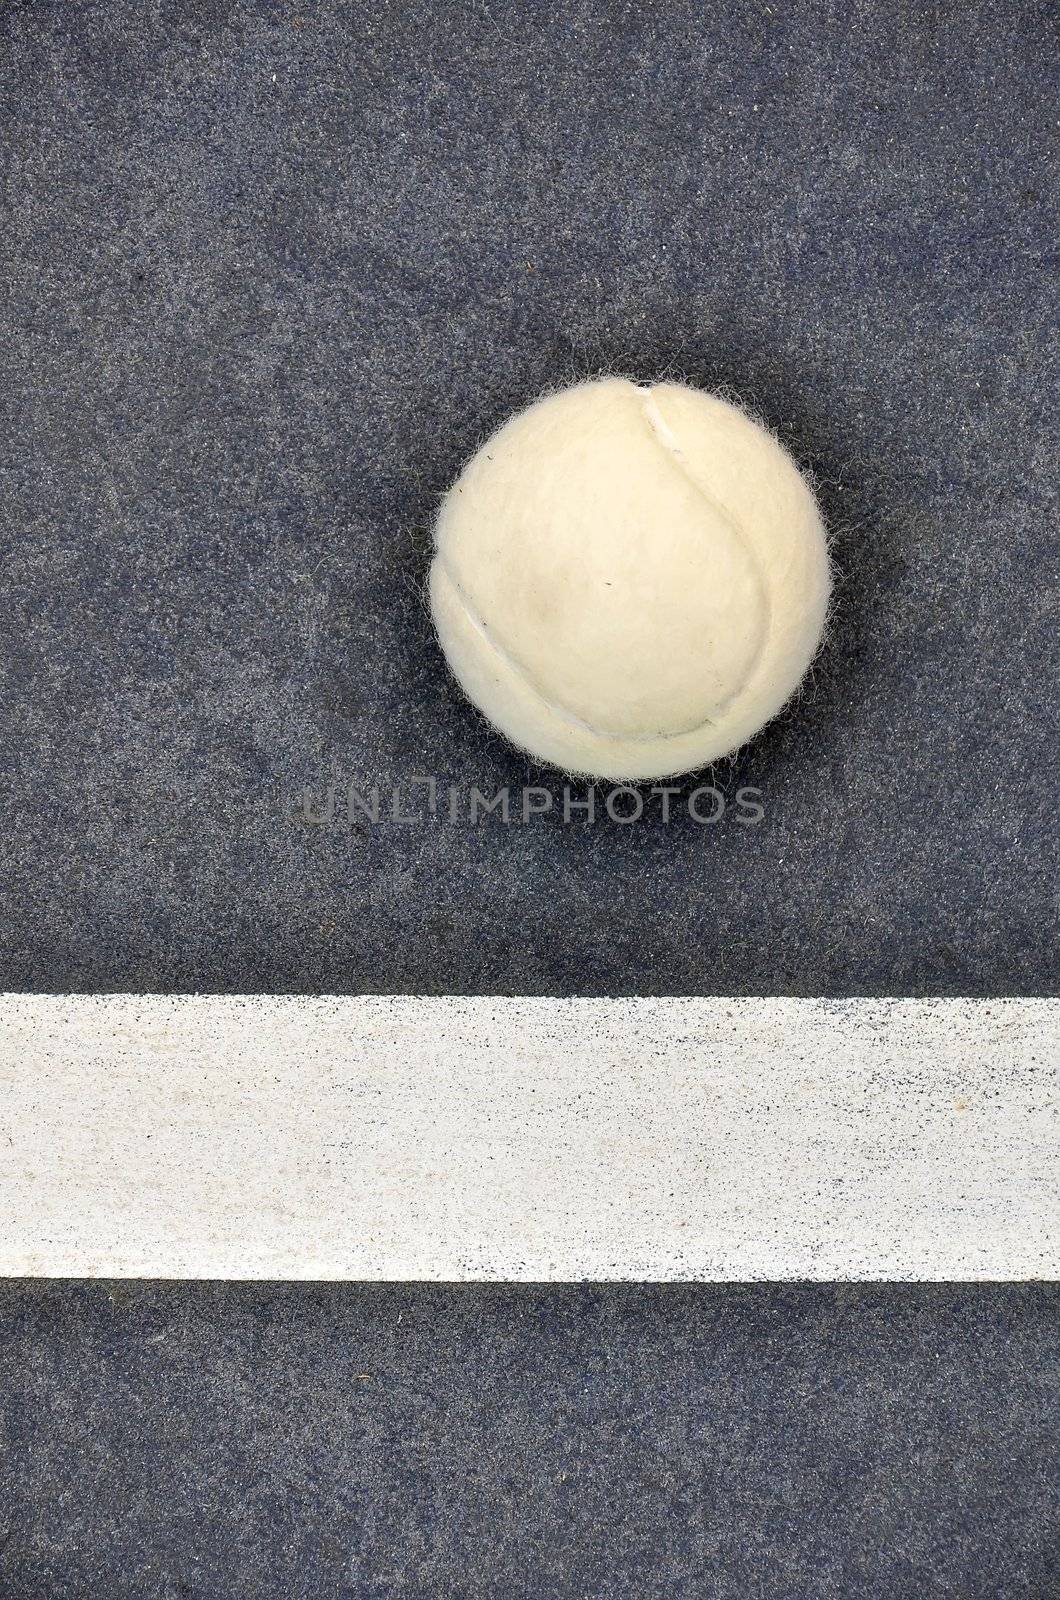 White Tennis ball by phanlop88